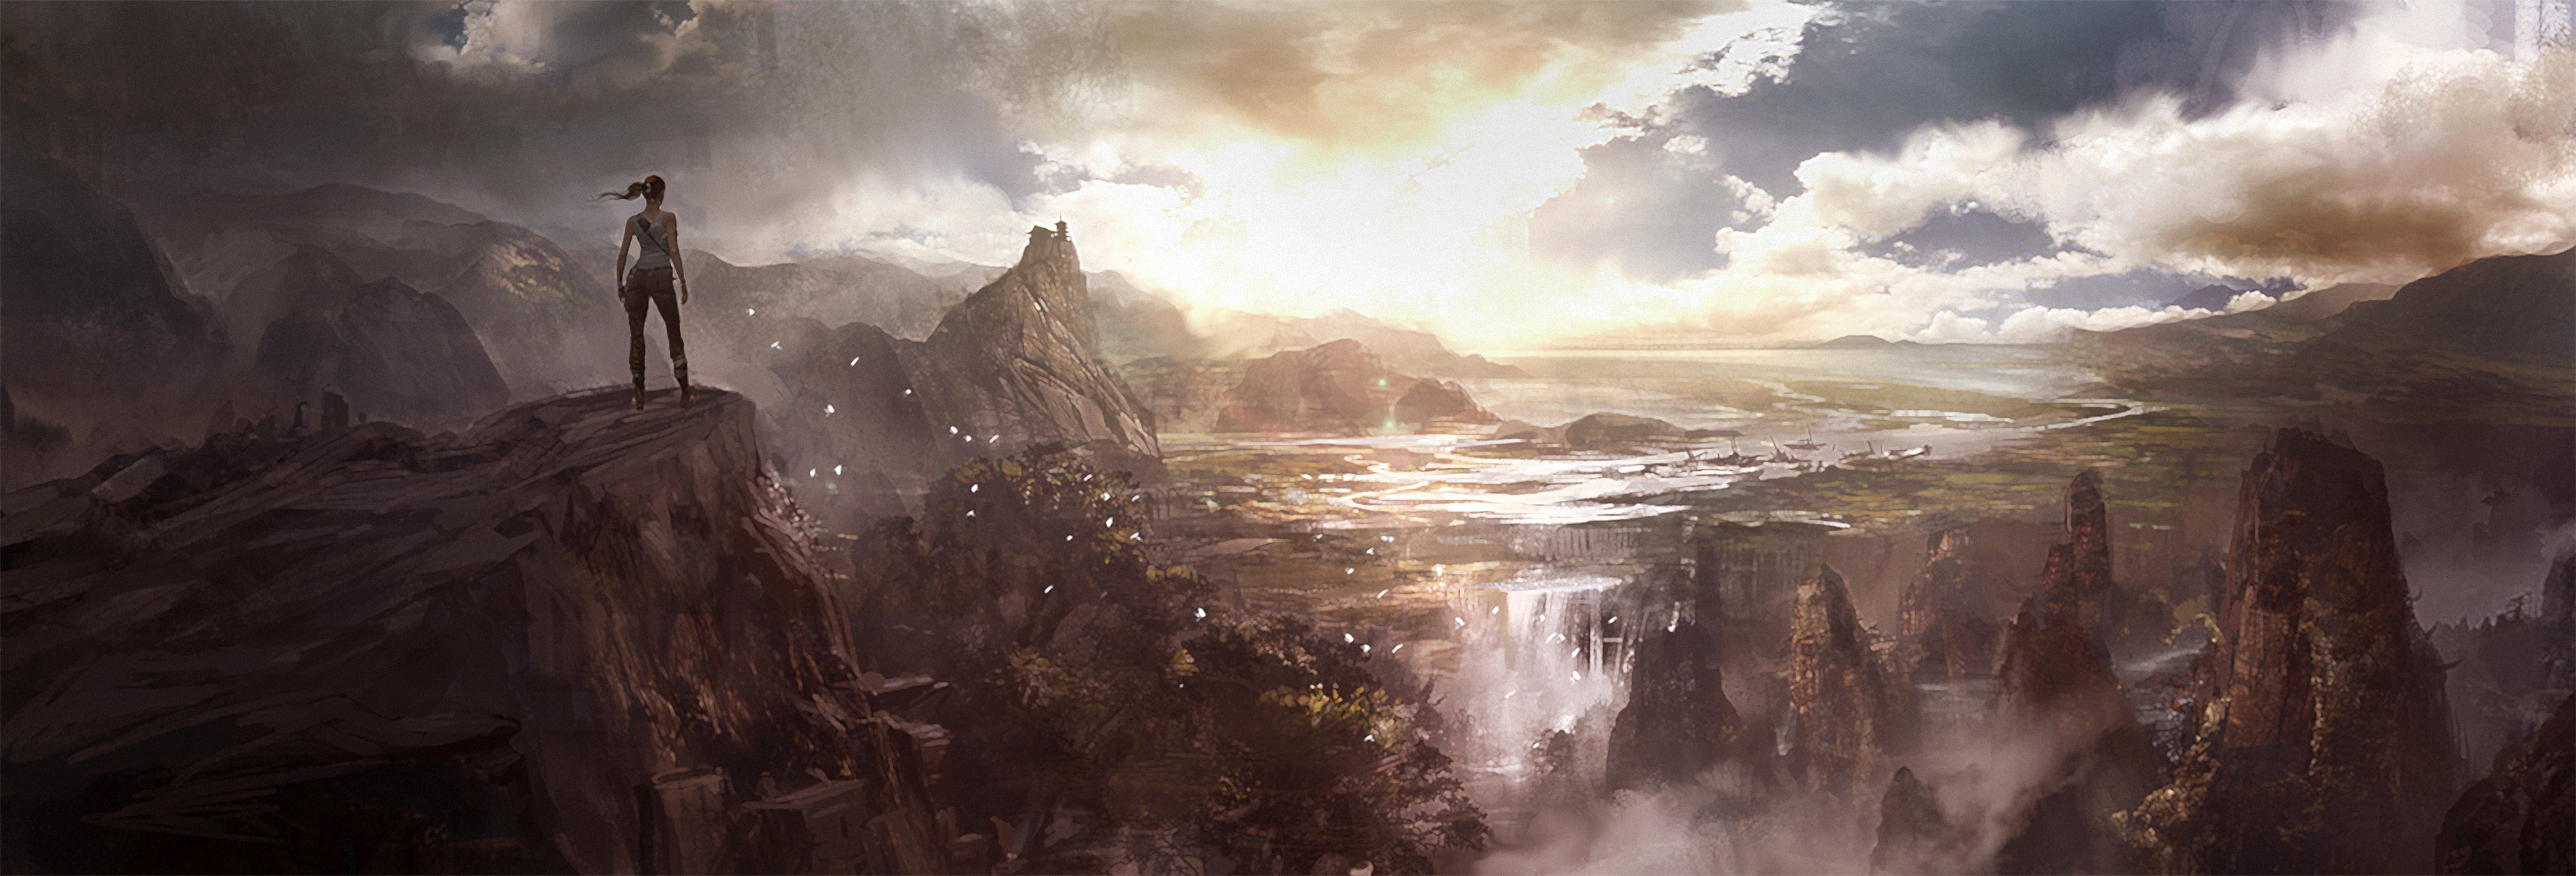 Horizon Landscape Lara Croft Mountain Tomb Raider 2013 Waterfall 6000x2040